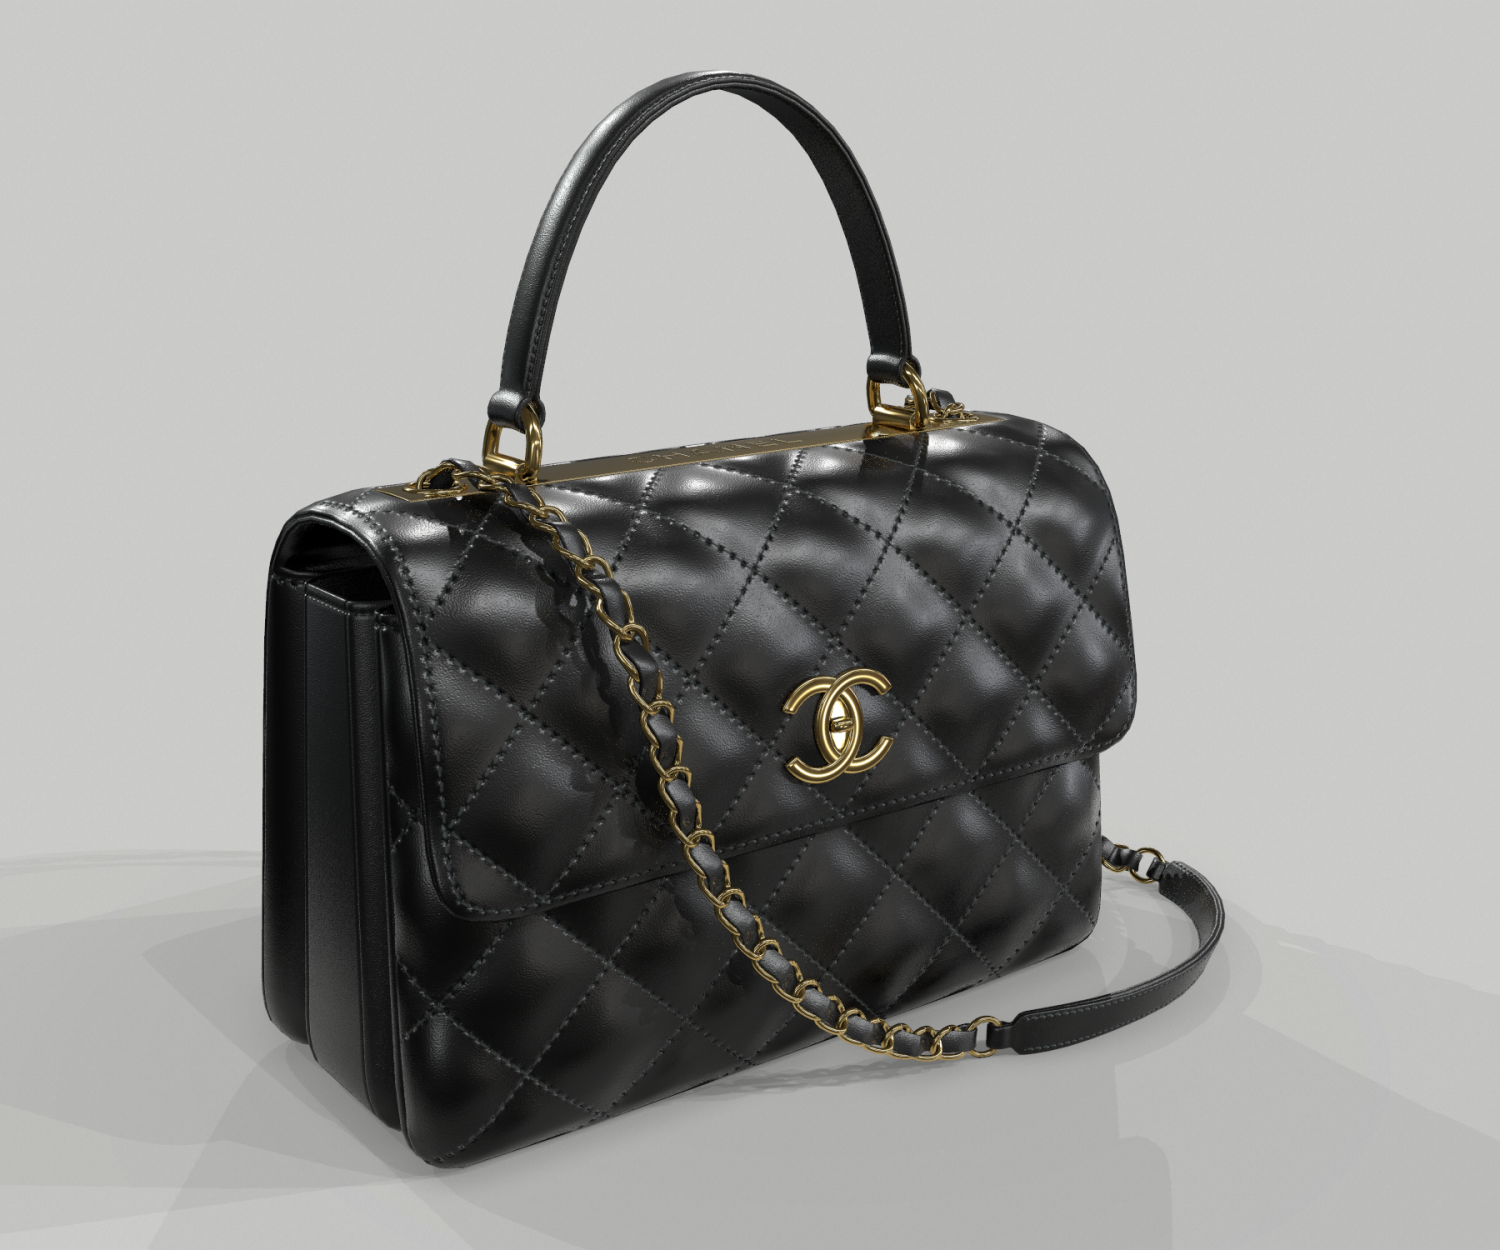 Chanel Bag Small Flap Blue | 3D model